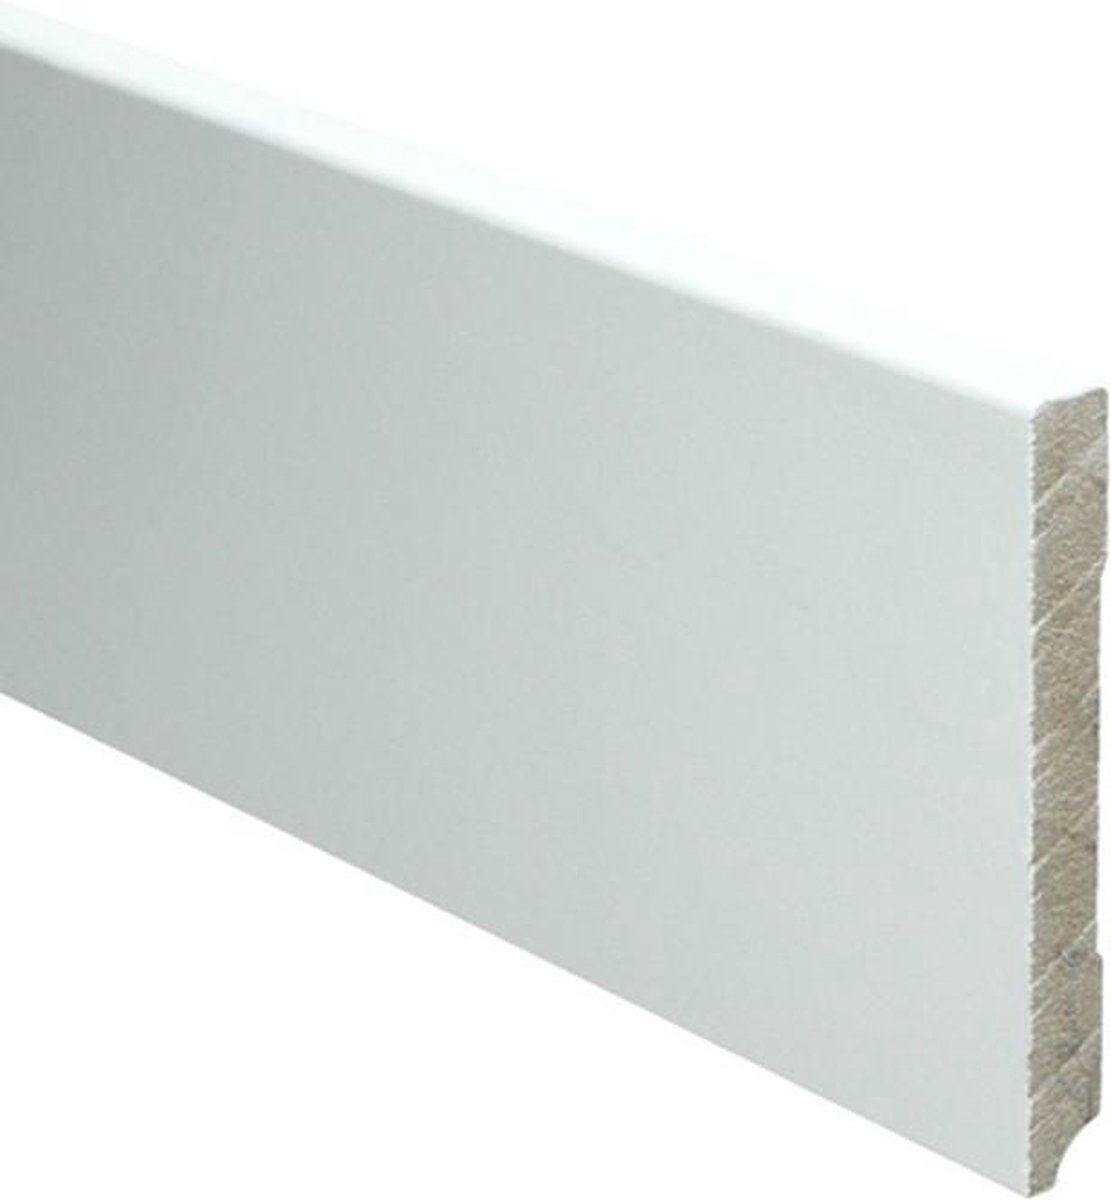 Hoge plinten - MDF - Moderne plint 150x18 mm - Wit - Voorgelakt - RAL 9016 - Per 5 stuks 2,4m